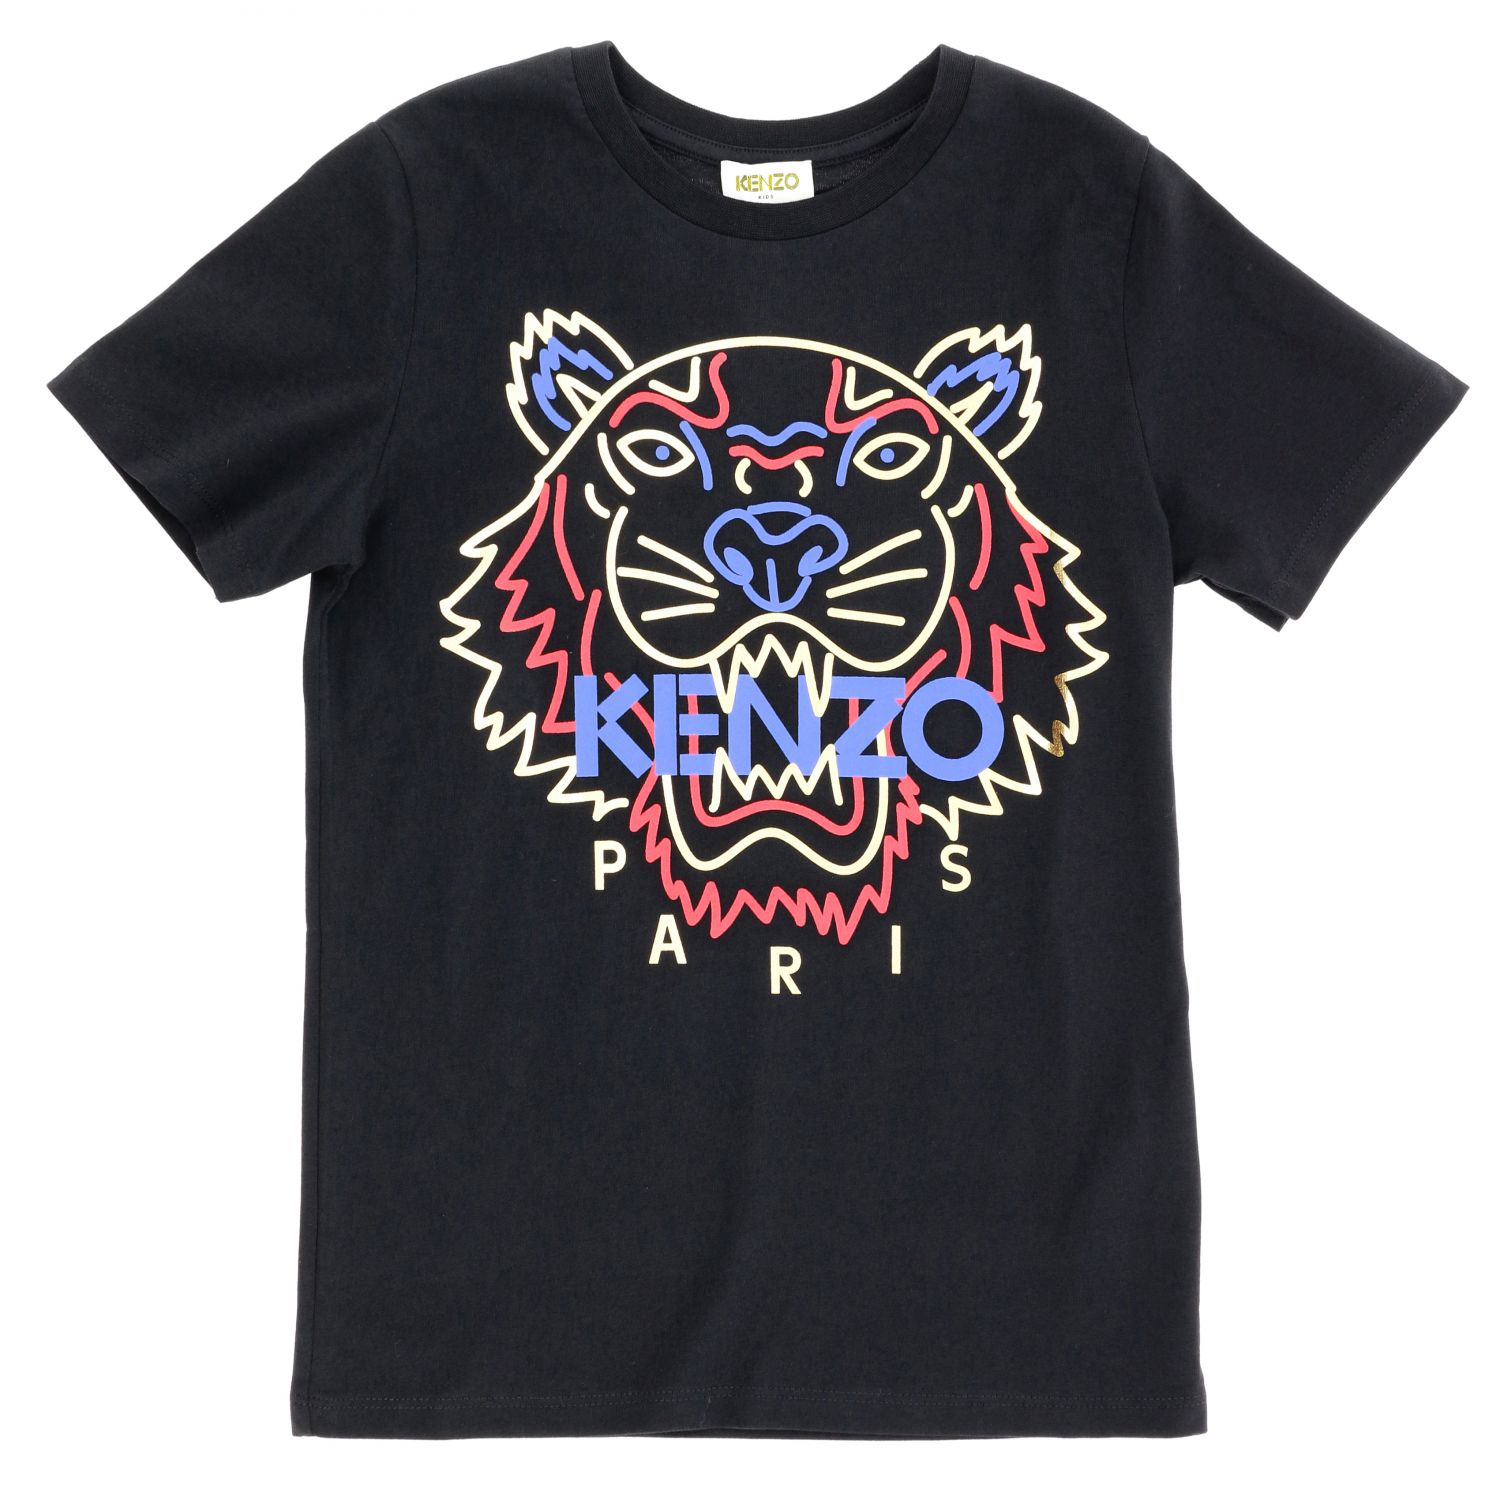 kenzo t shirt Cheaper Than Retail Price 